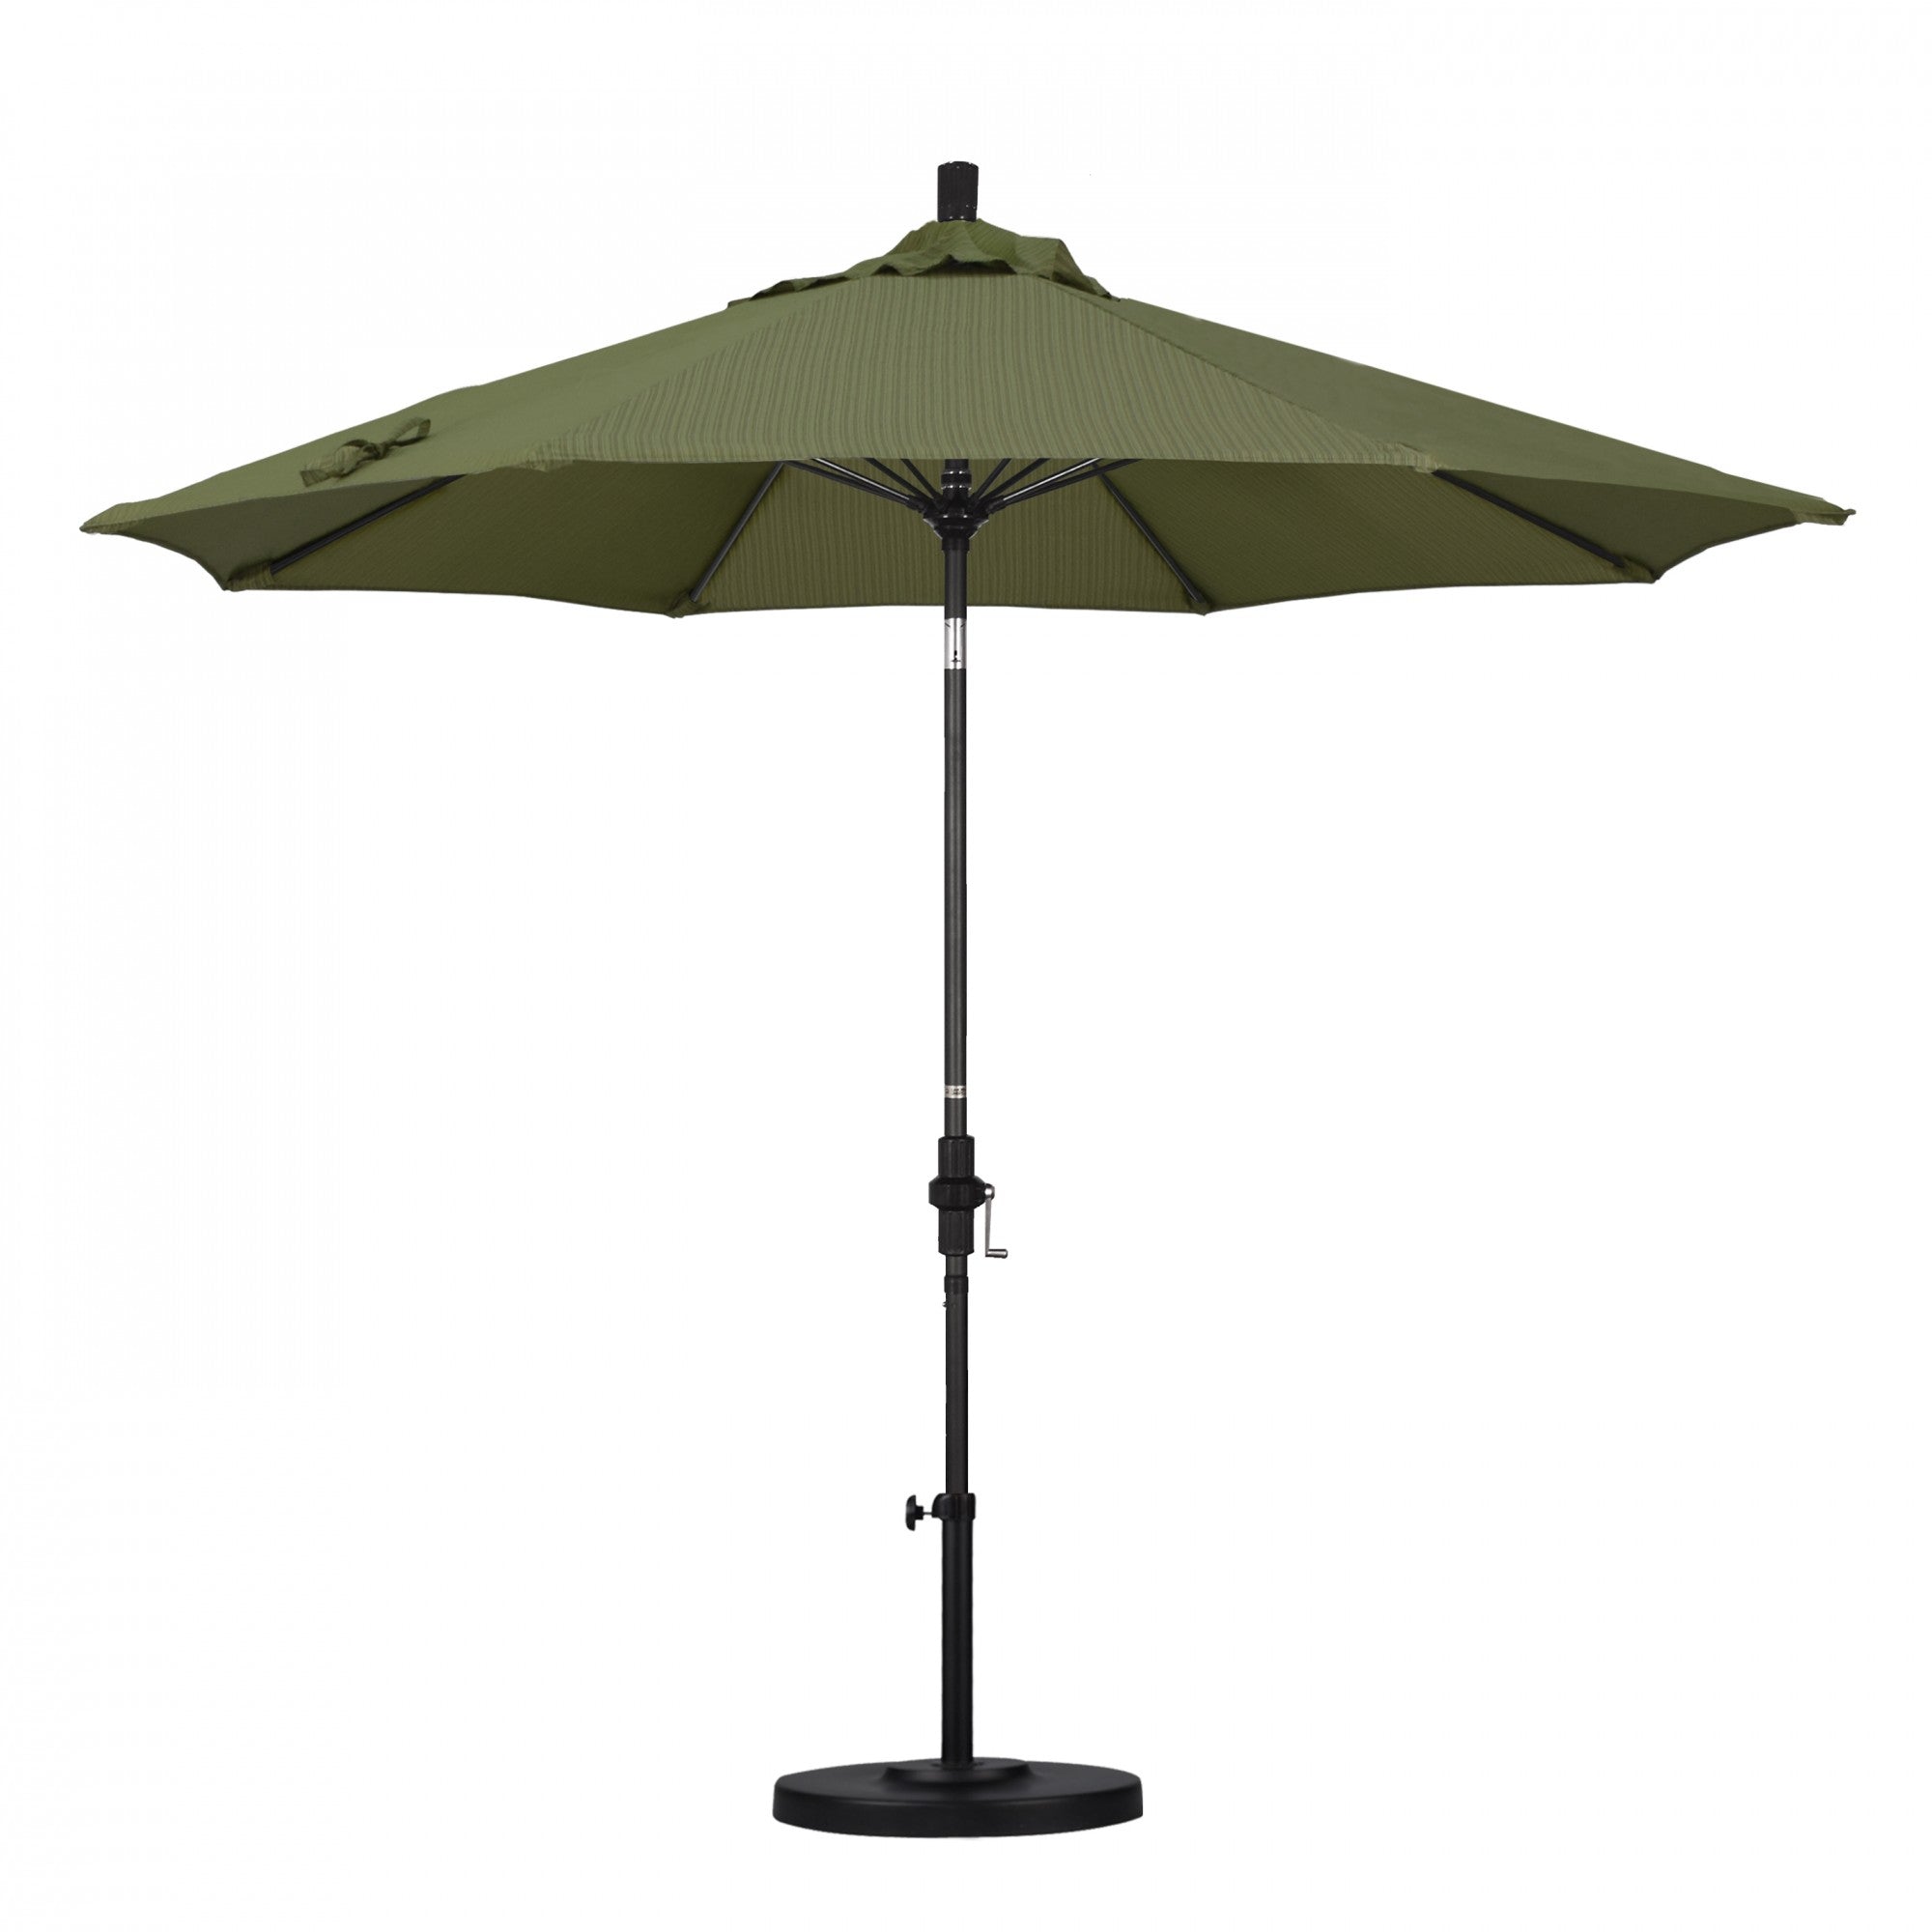 California Umbrella - 9' - Patio Umbrella Umbrella - Aluminum Pole - Terrace Fern - Olefin - GSCUF908705-FD11